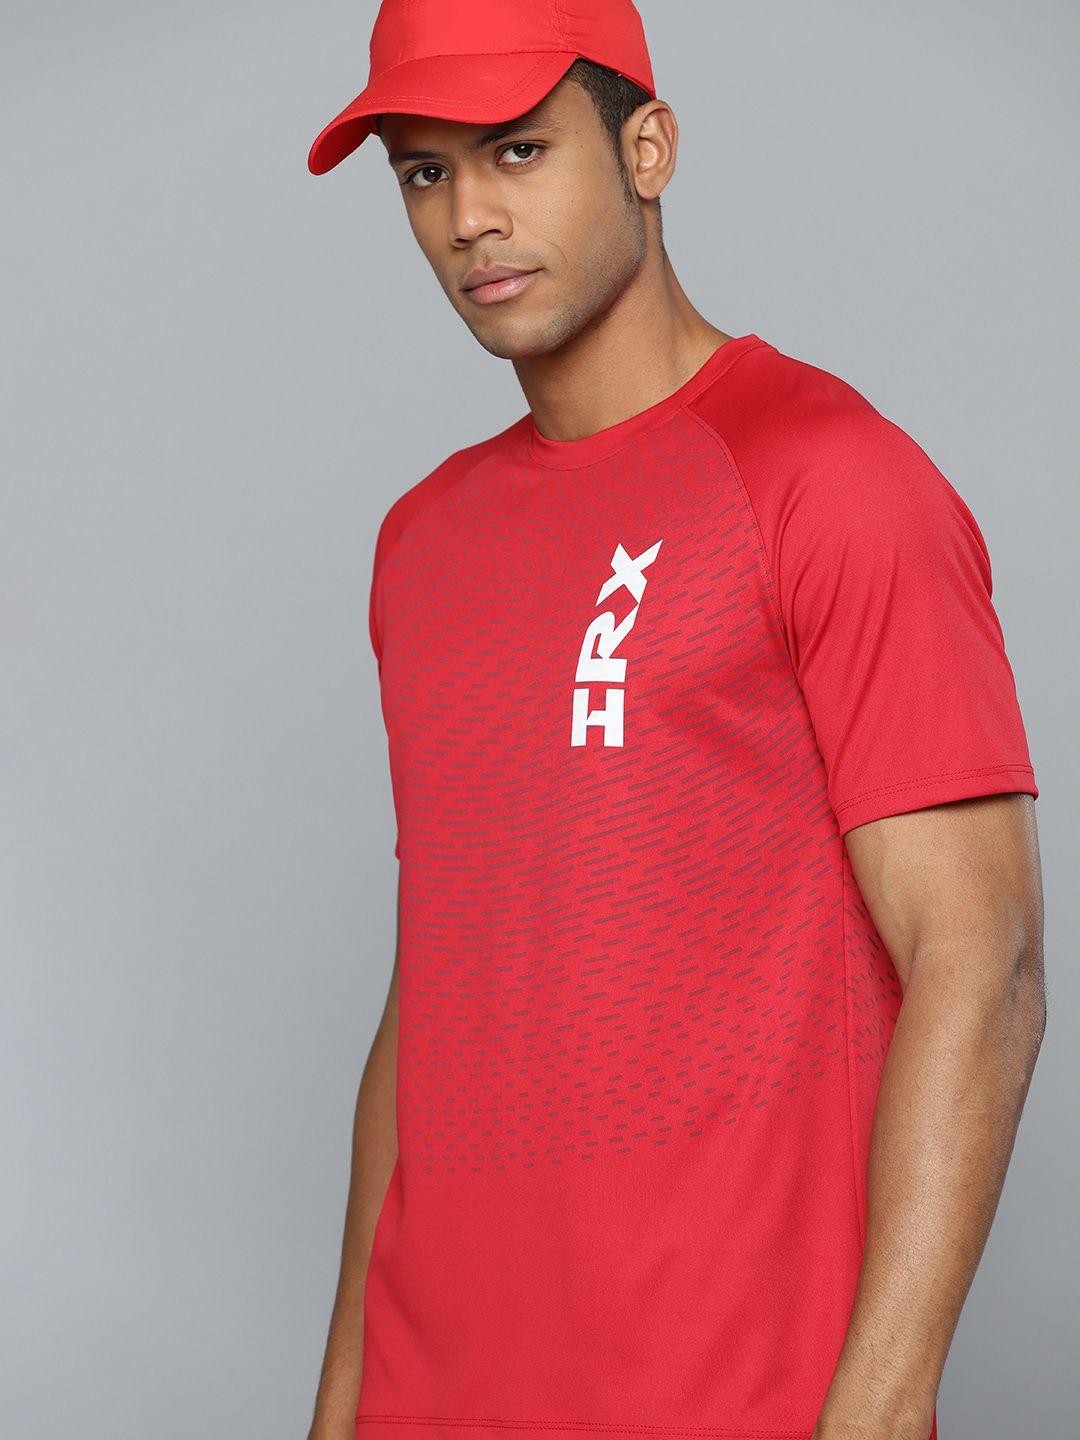 hrx by hrithik roshan printed rapid-dry training t-shirt